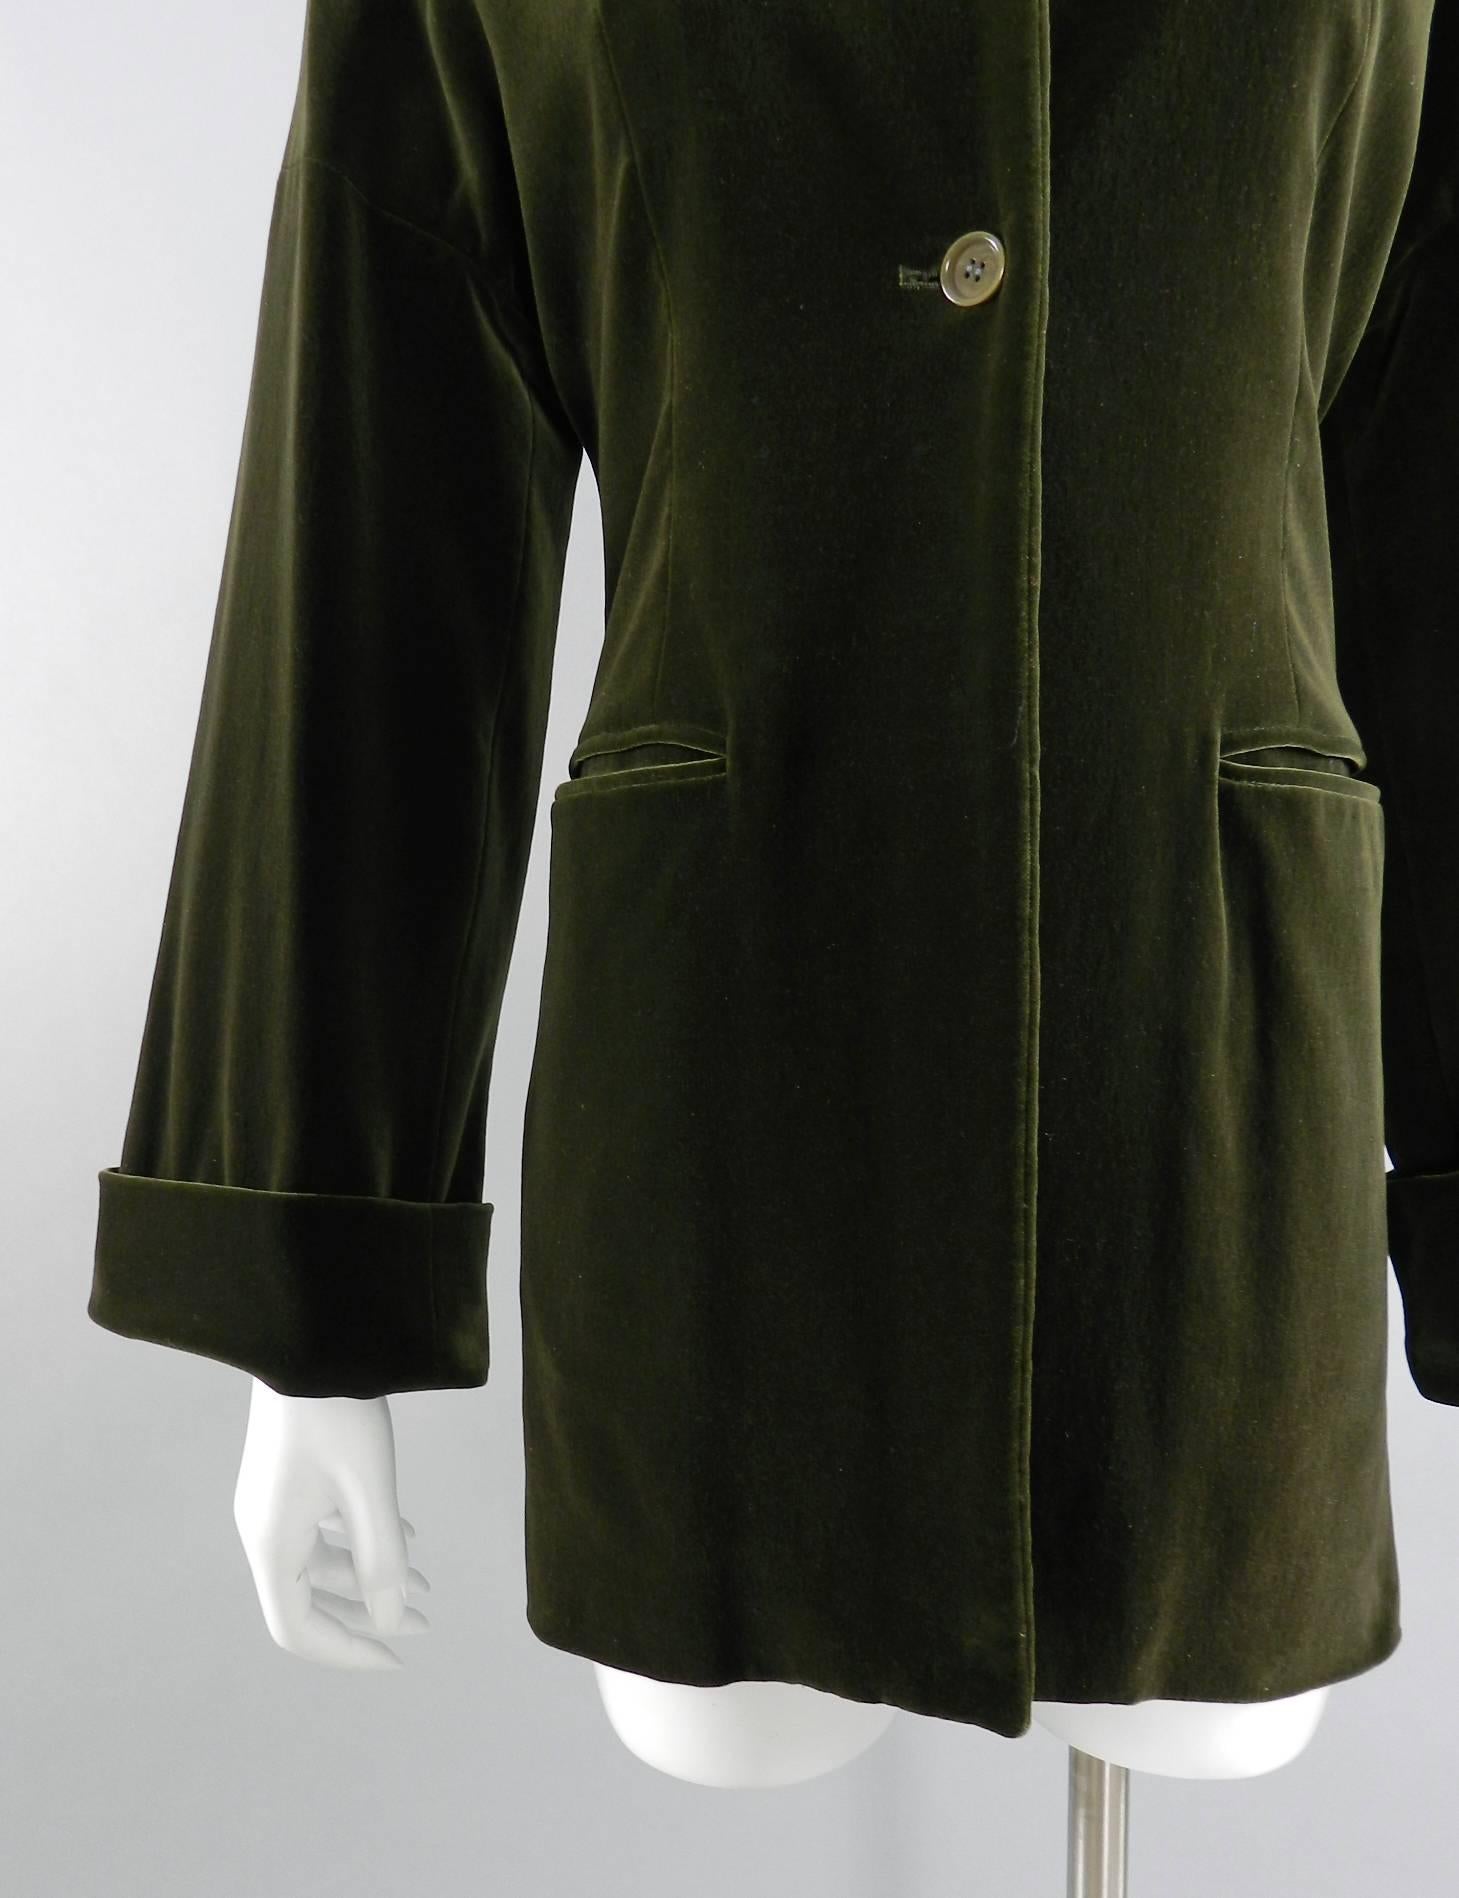 Black Romeo Gigli Vintage 1989 Olive Green Velvet Jacket Coat